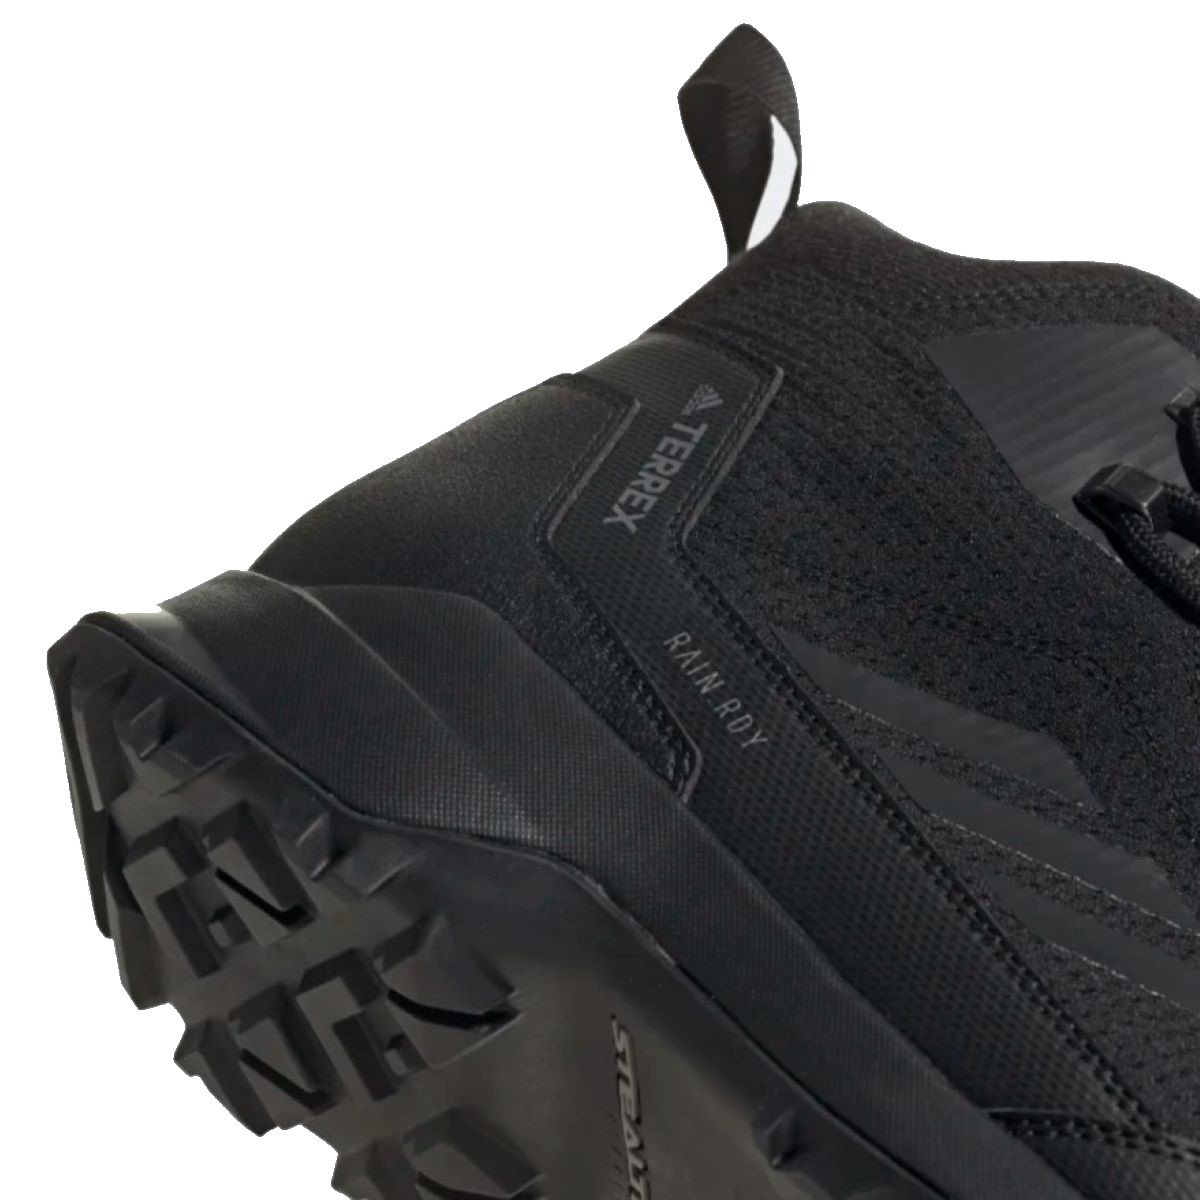 Obuv Adidas Terrex Frozetrack Mid M - černá